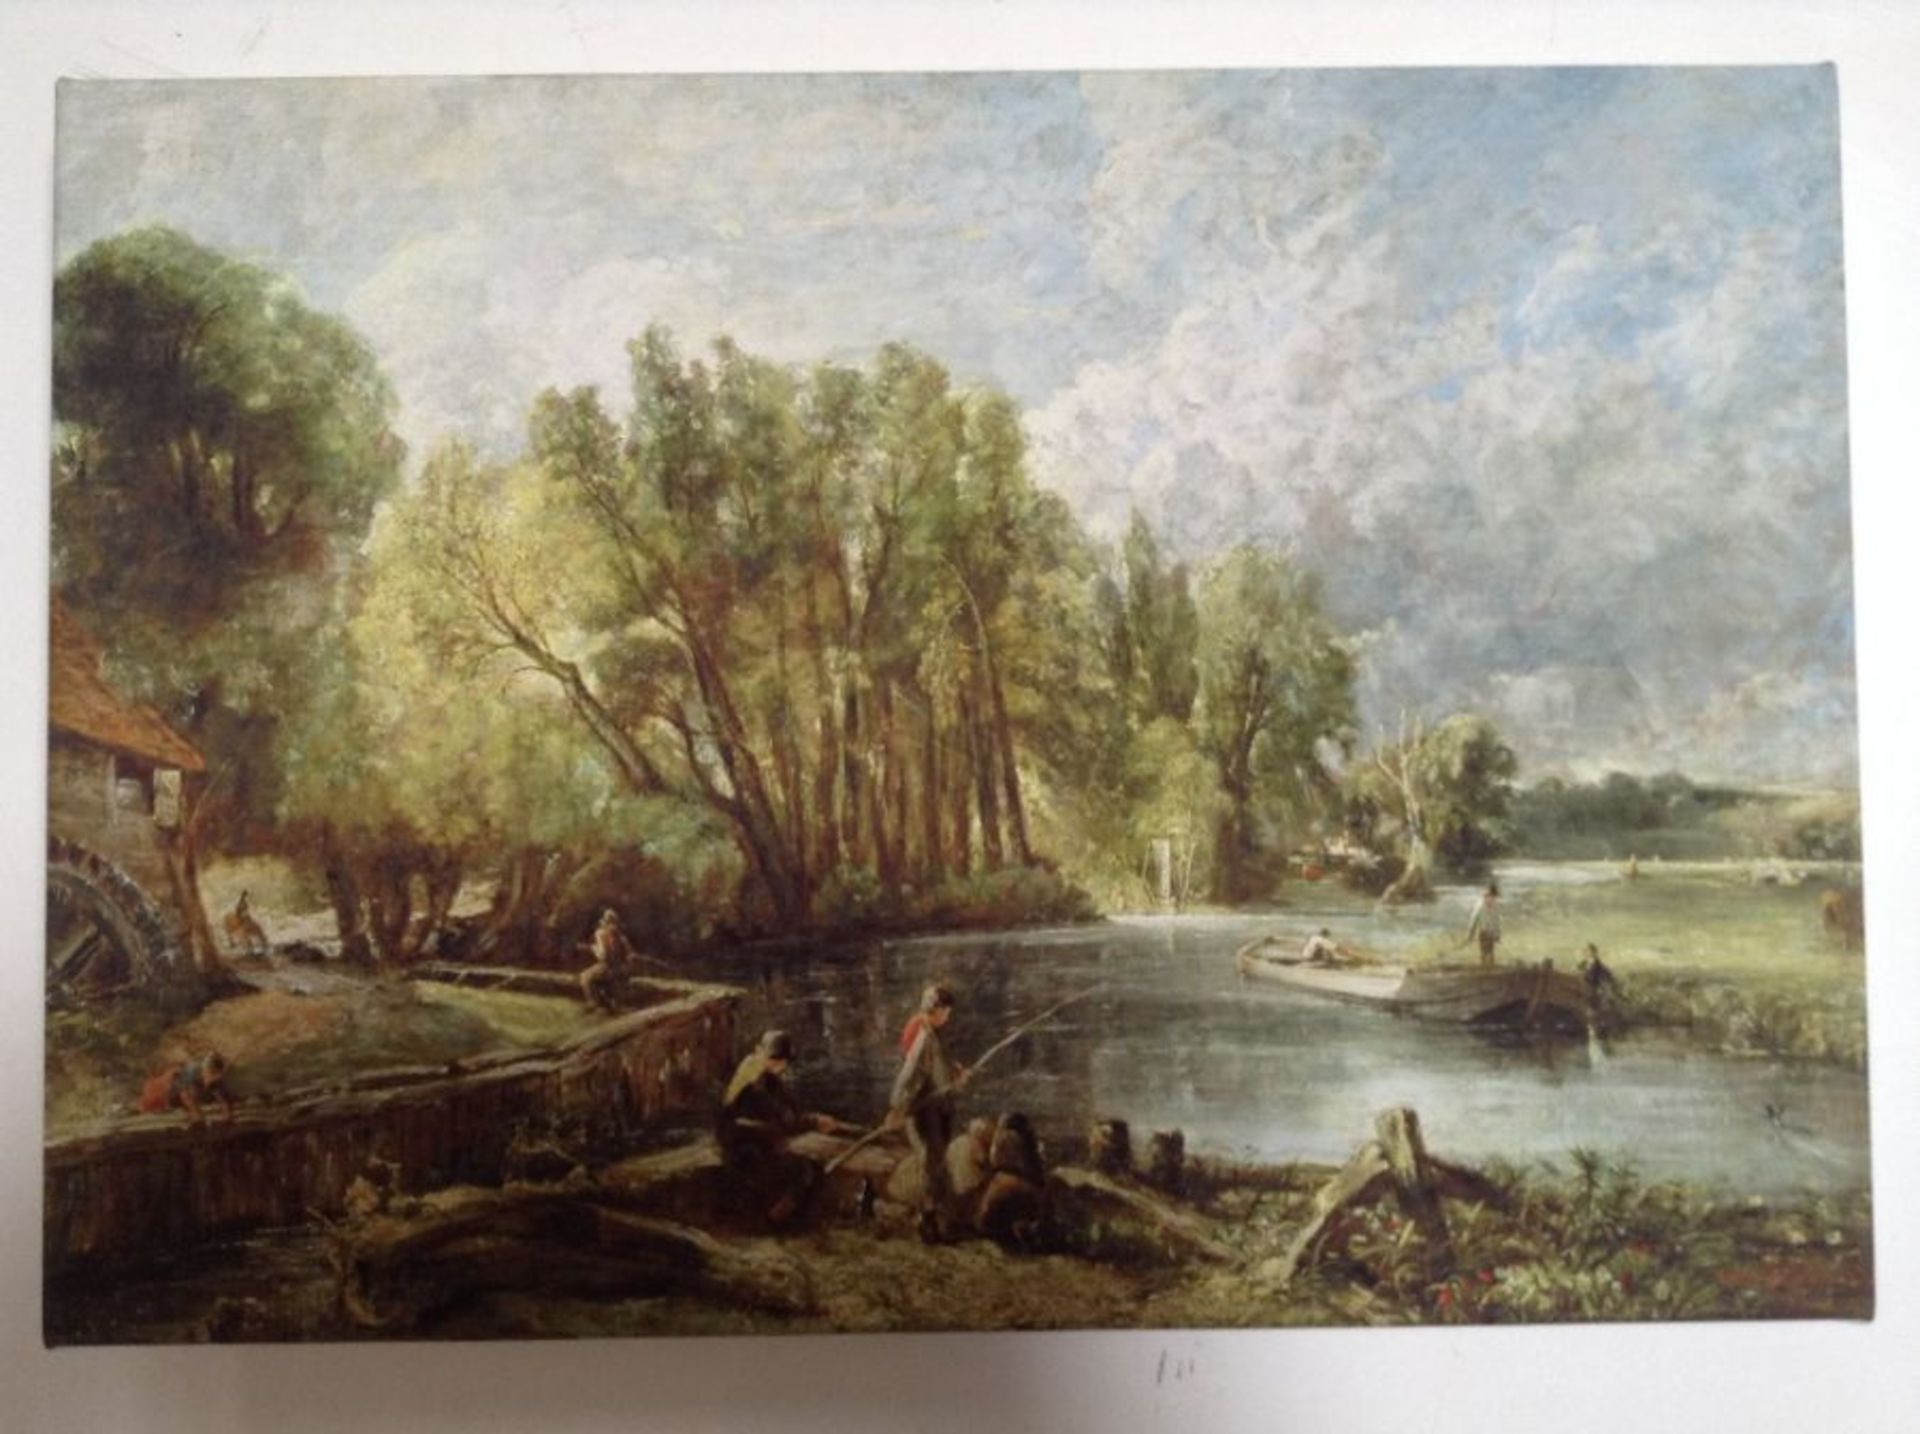 East Urban Home, John Constable - Art Prints on Canvas (SMALL) - RRP £32.99 (MGBX1403 - 14011/6) 1F